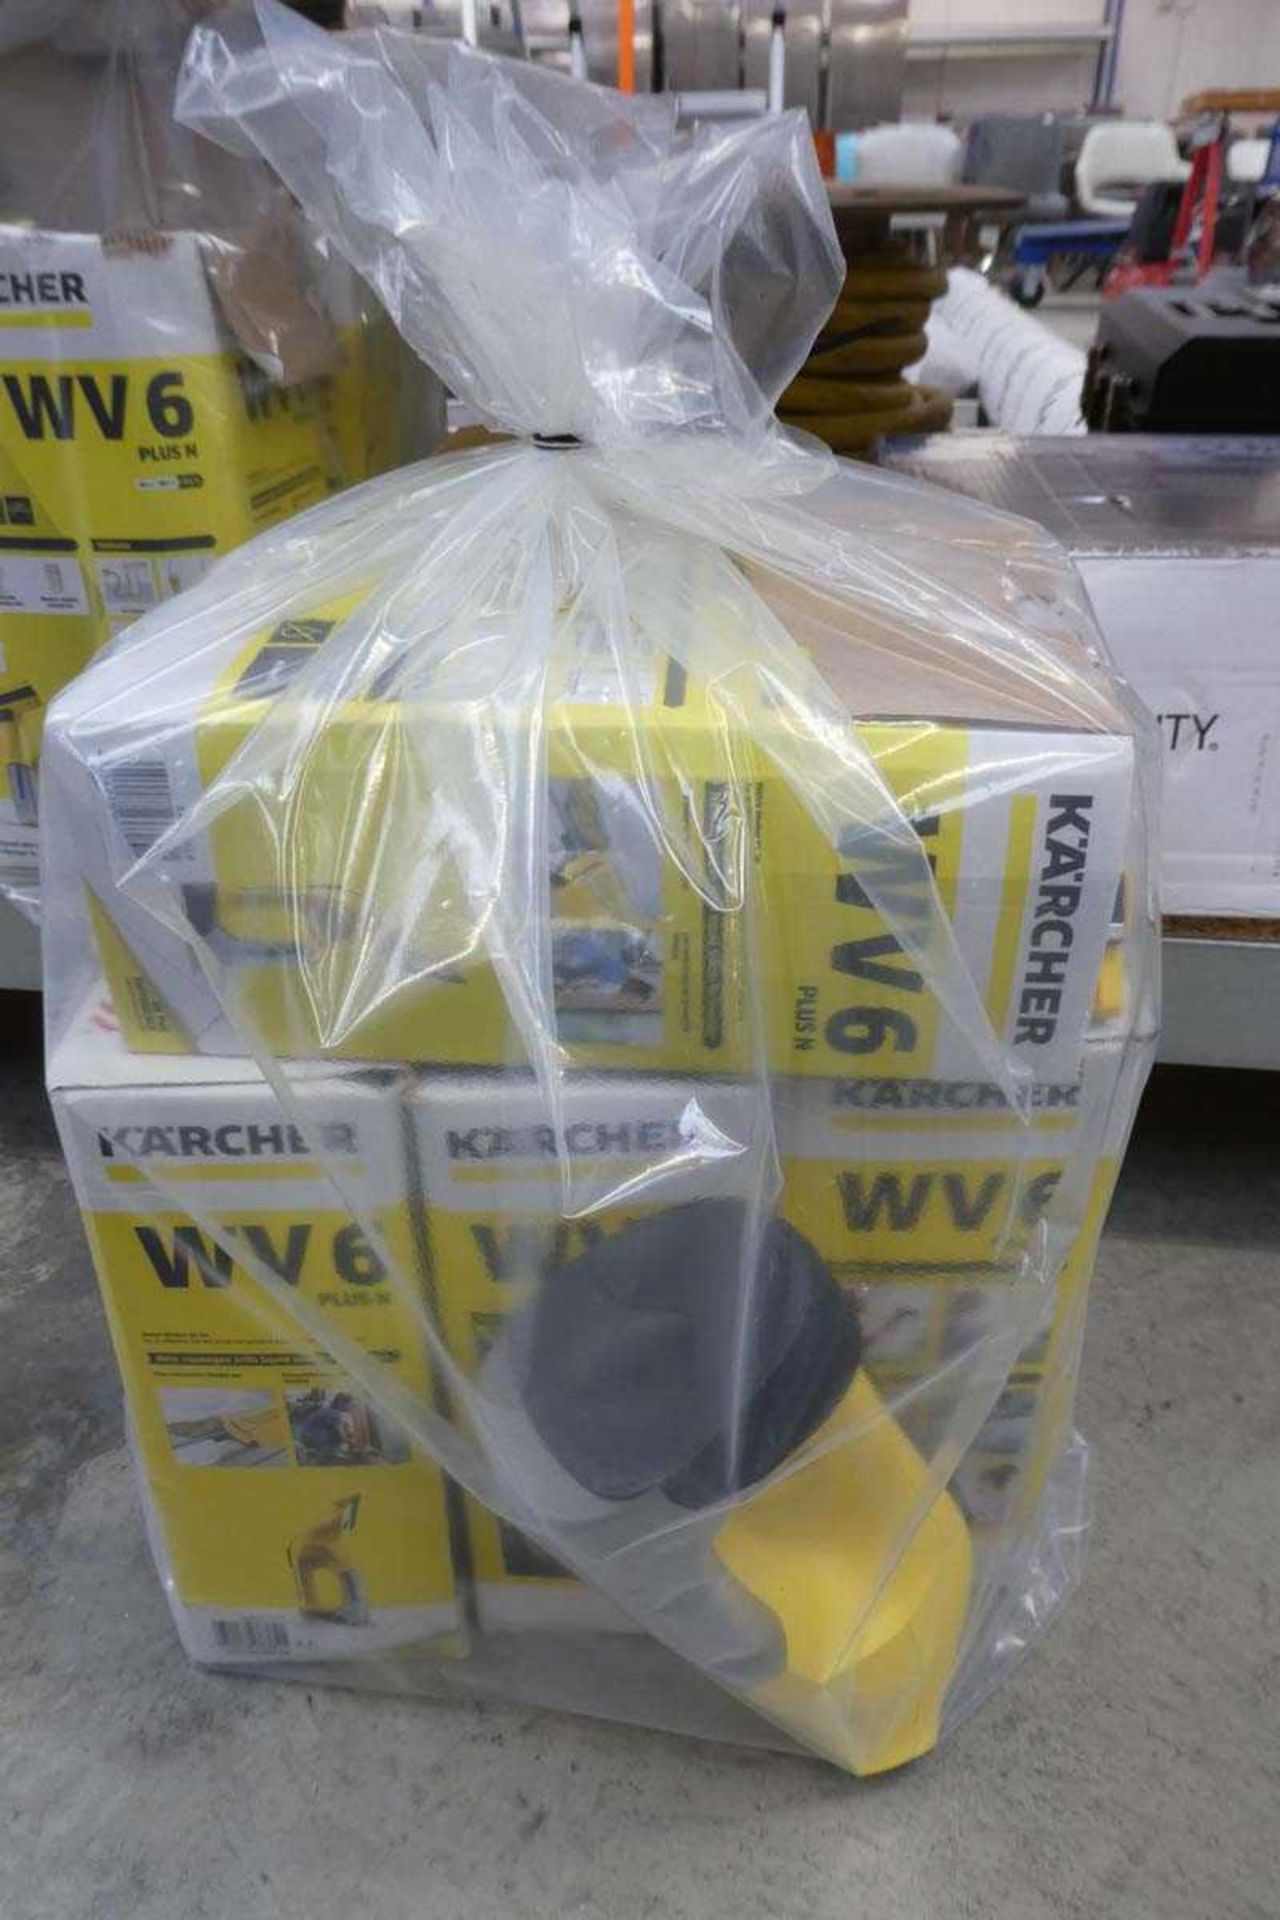 +VAT Bag containing 4 Karcher WV 6 cordless window vac